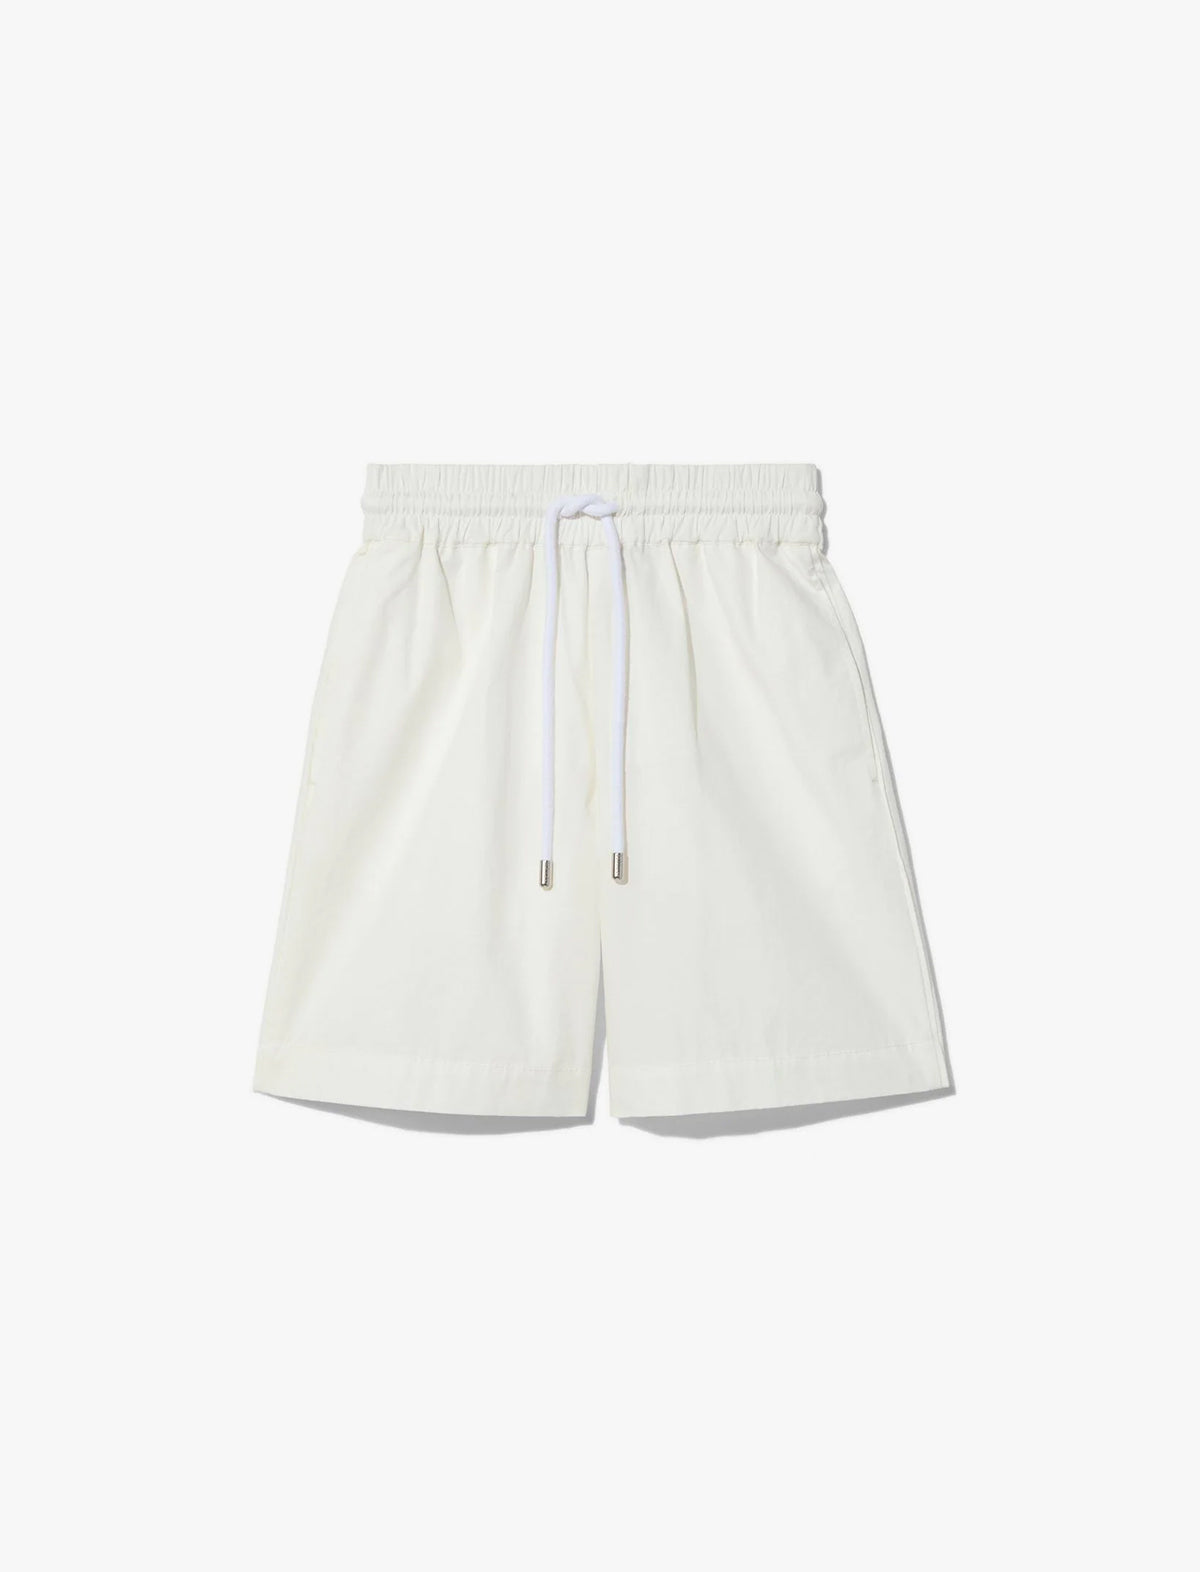 PROENZA SCHOULER WHITE LABEL Cotton Linen Shorts in Off White